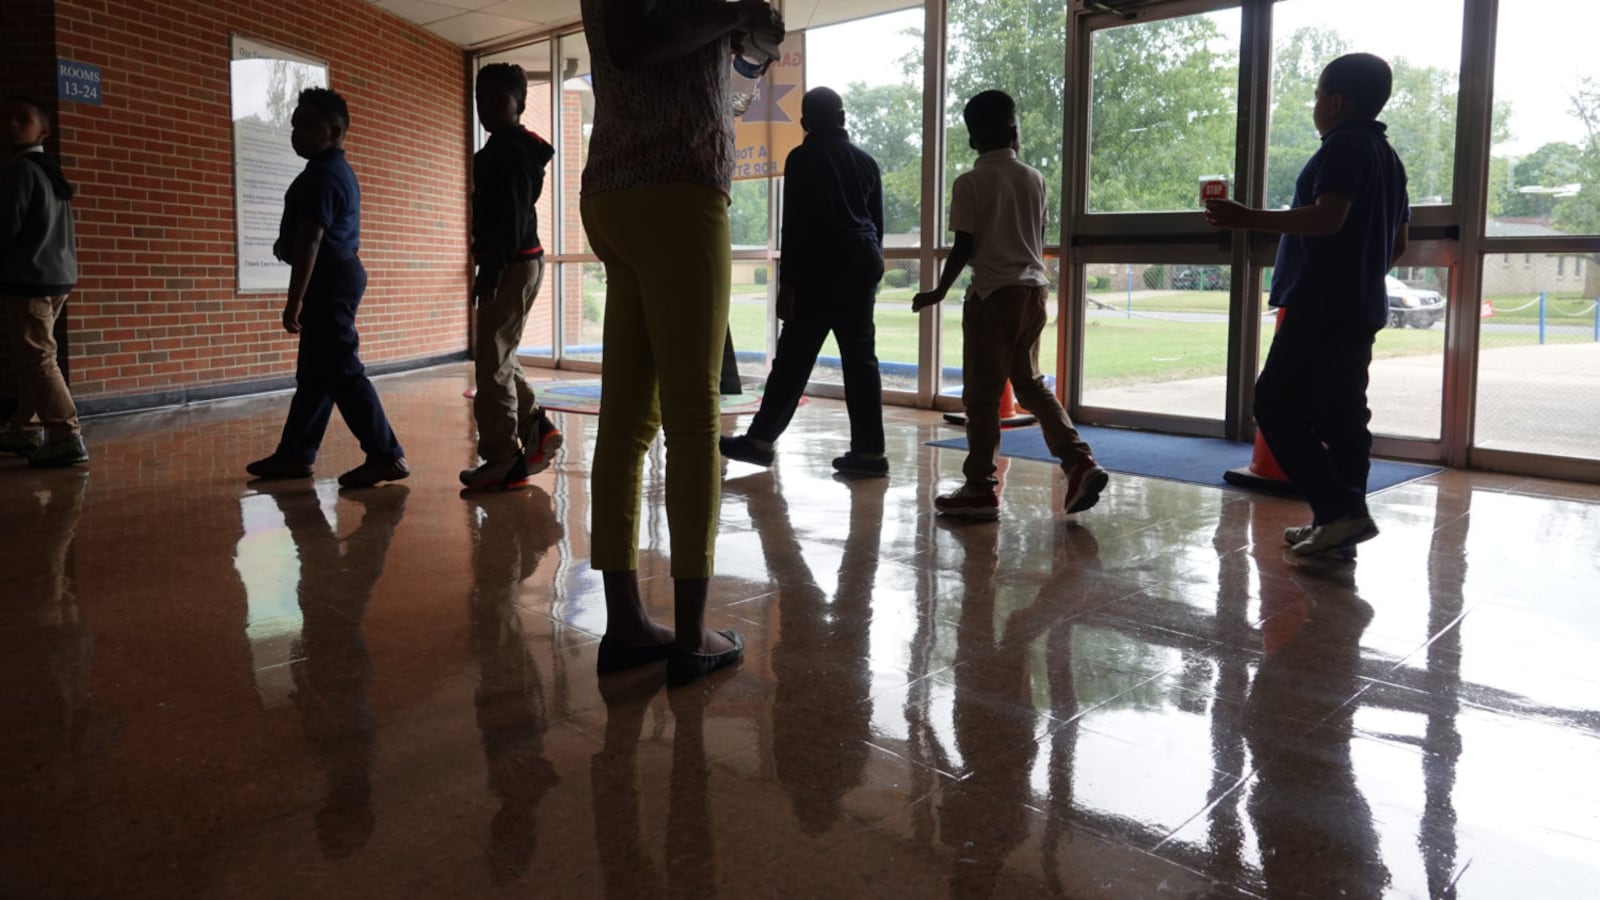 Students walk in a hallway between classes at Gardenview Elementary School in Memphis.